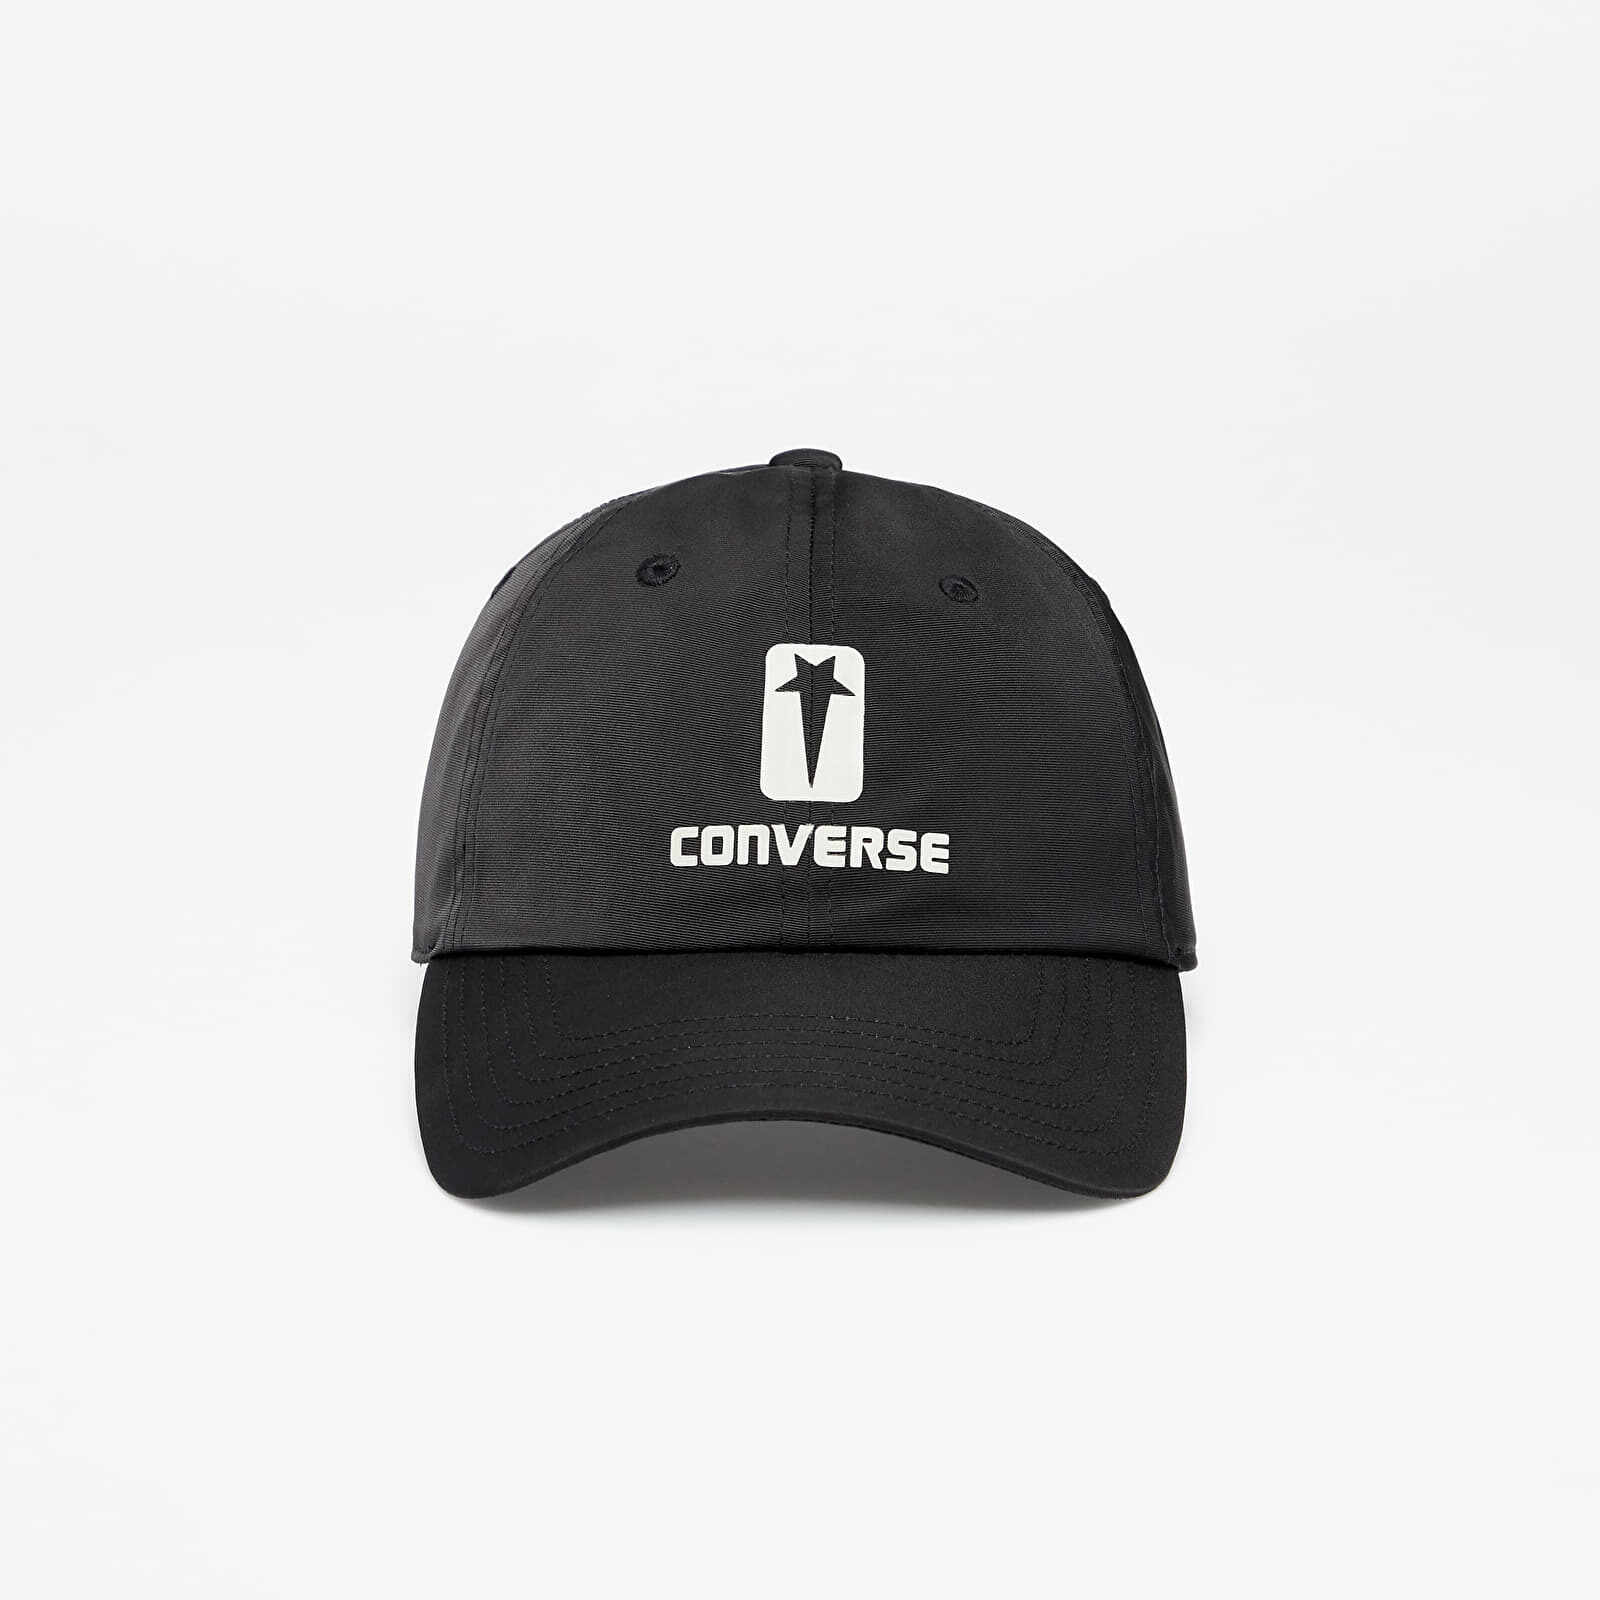 Converse x DRKSHDW Dad Cap Black